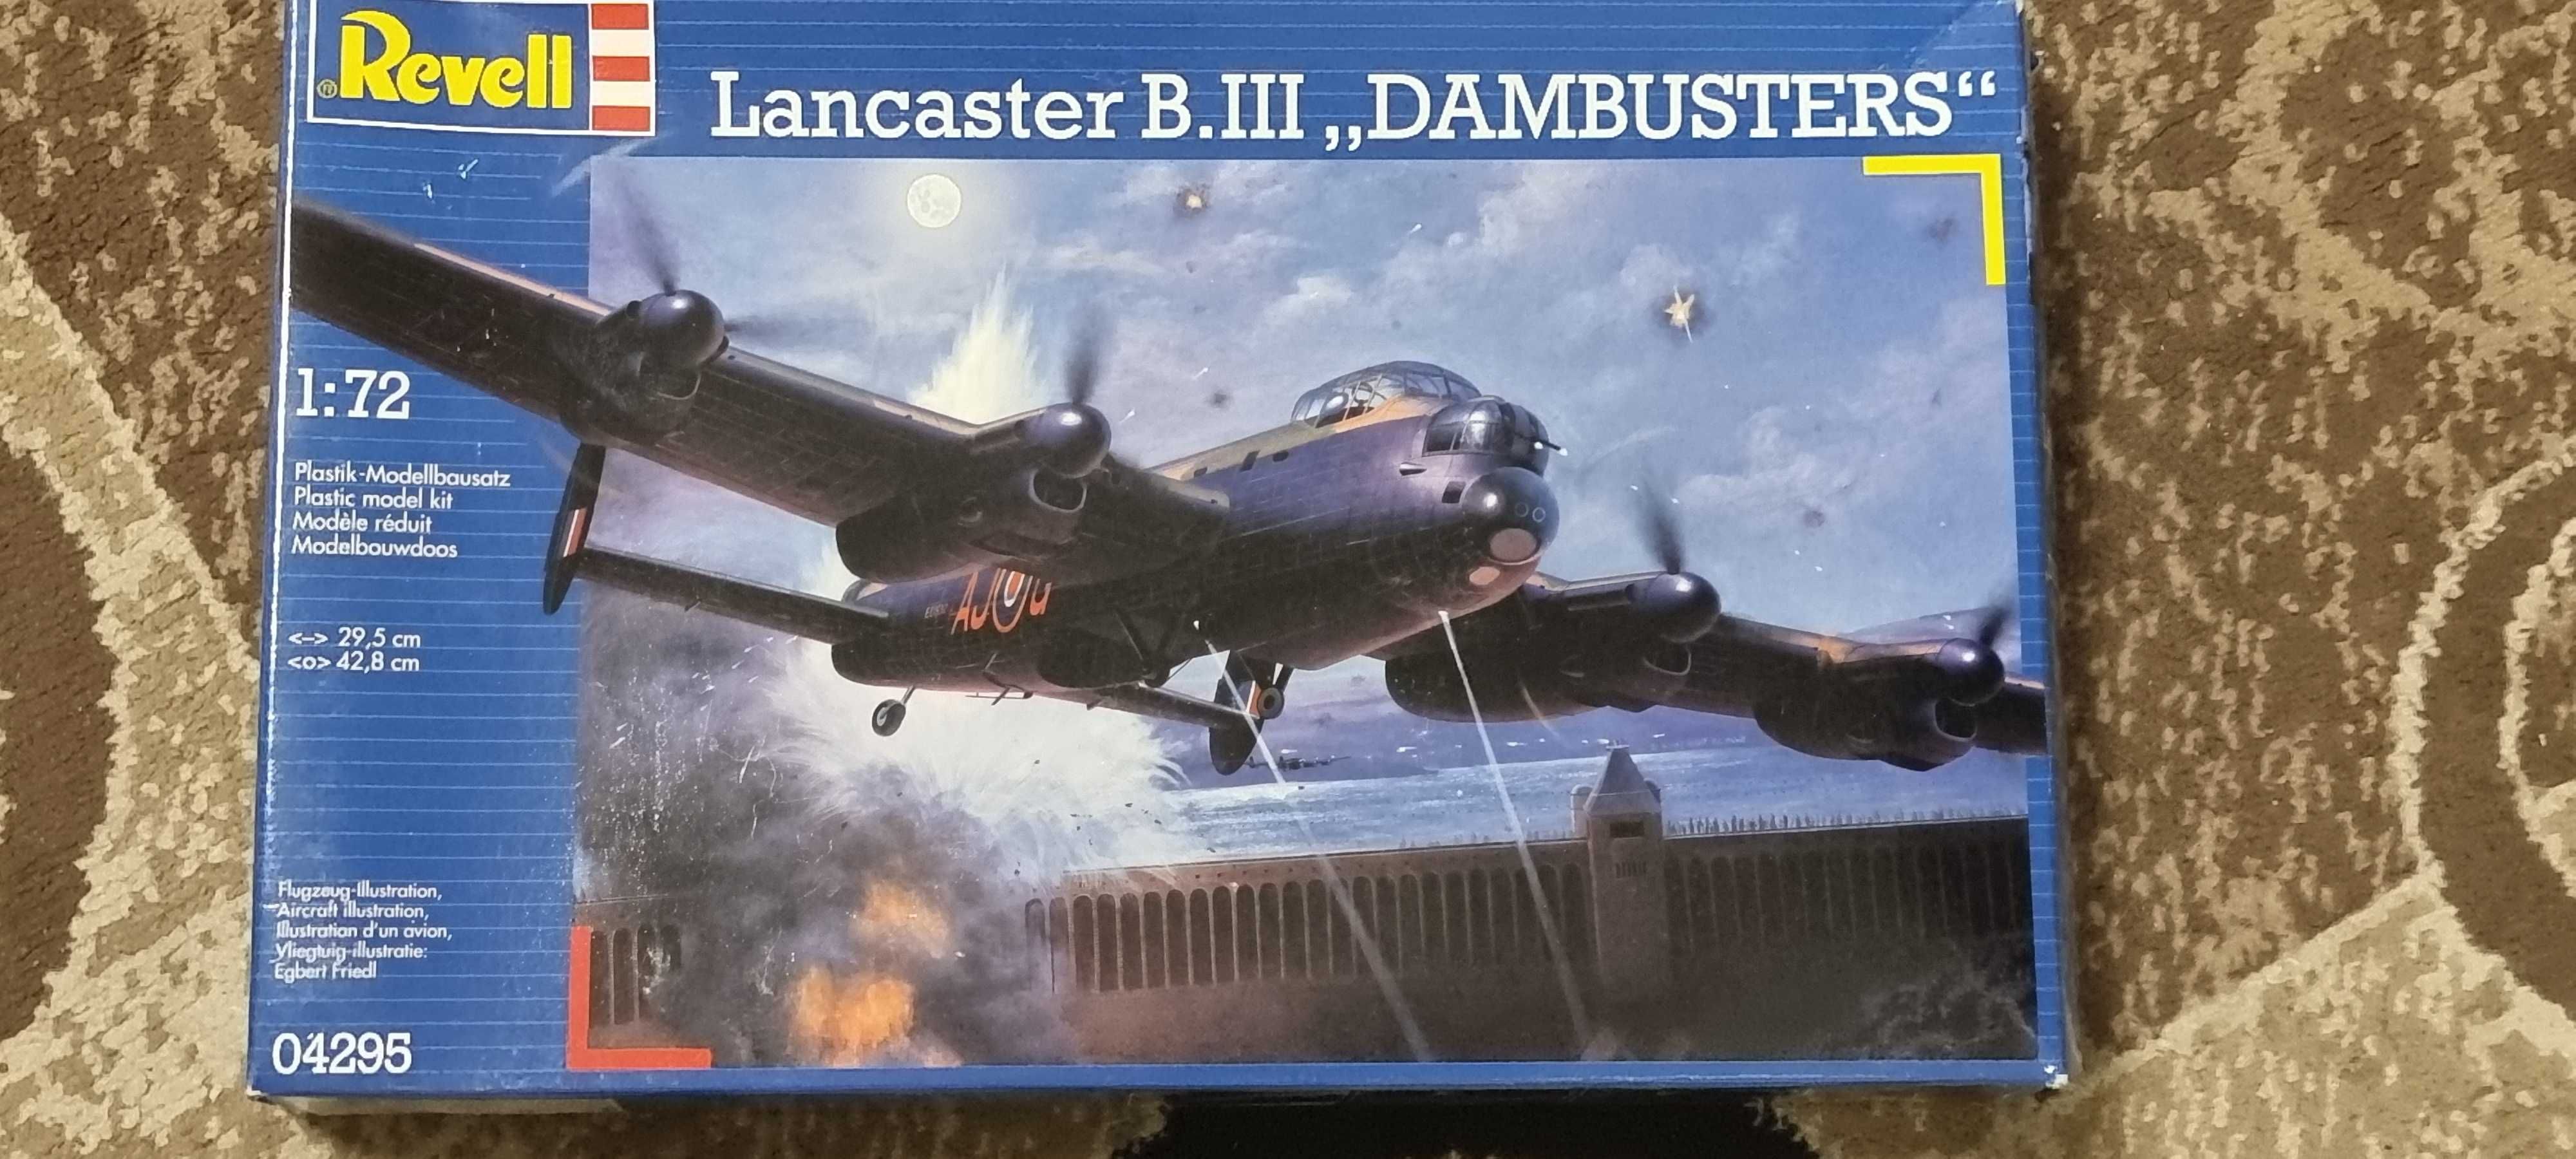 Lancaster B.III "Dambasters"